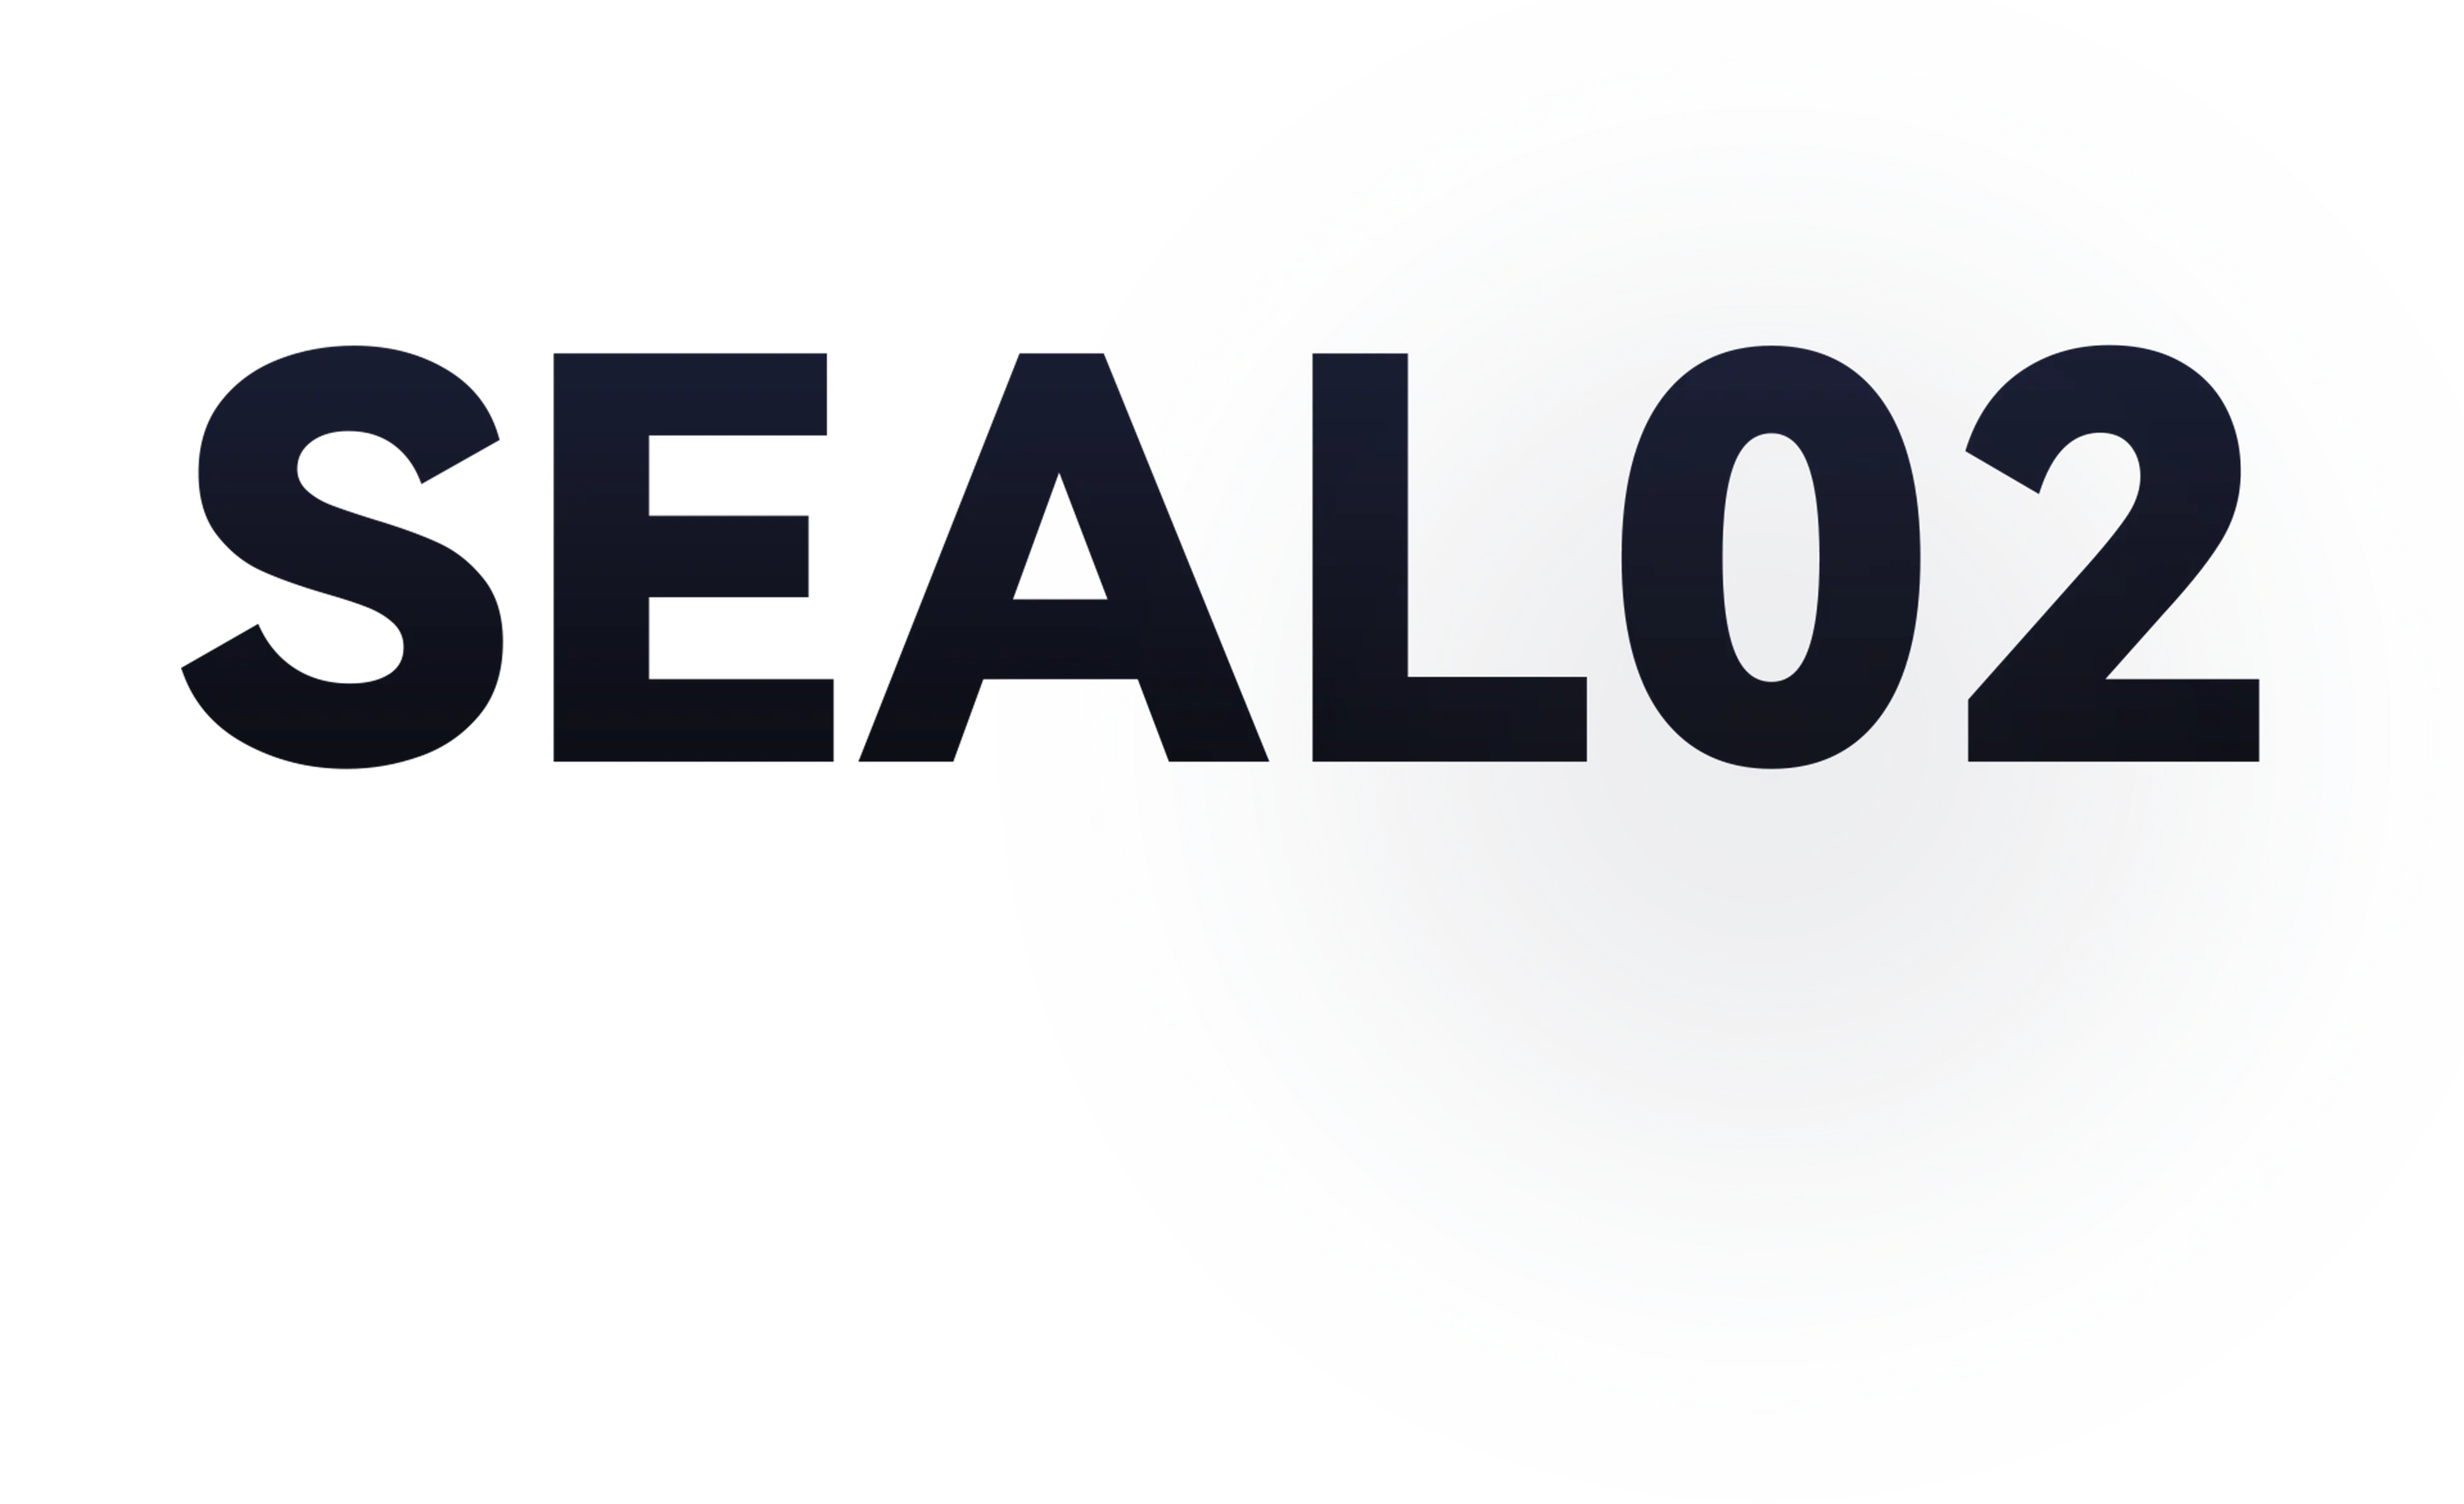 seal02_bg